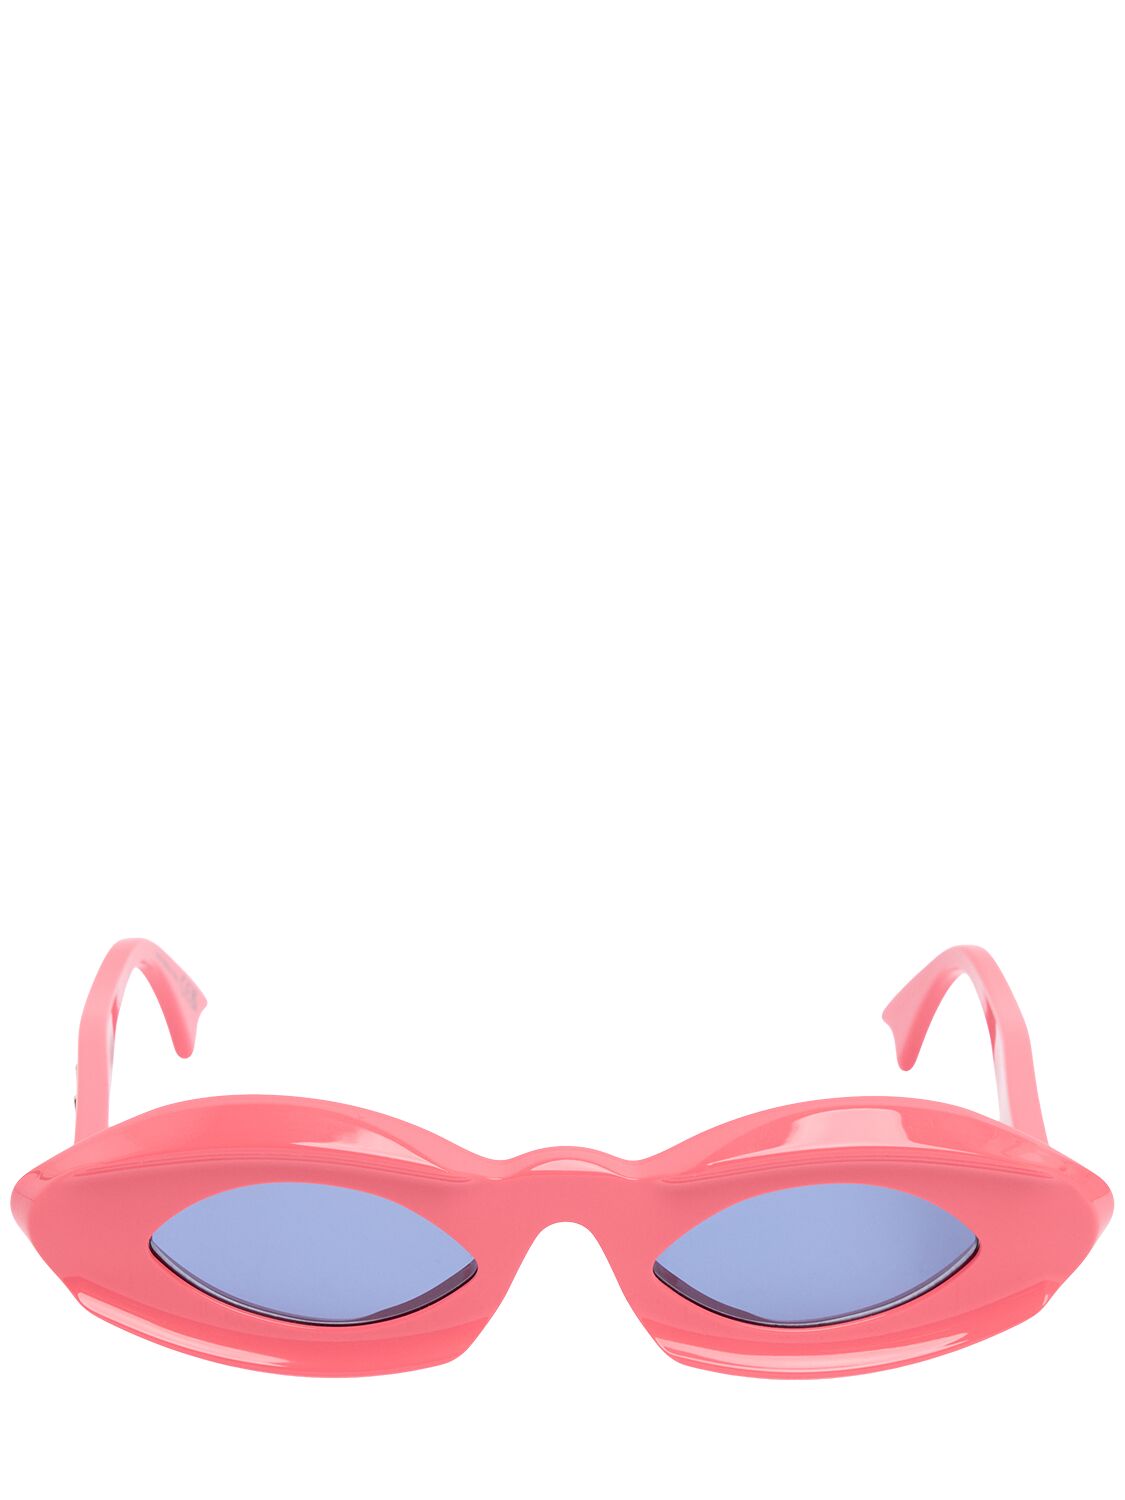 Image of Dark Doodad Pink Acetate Sunglasses